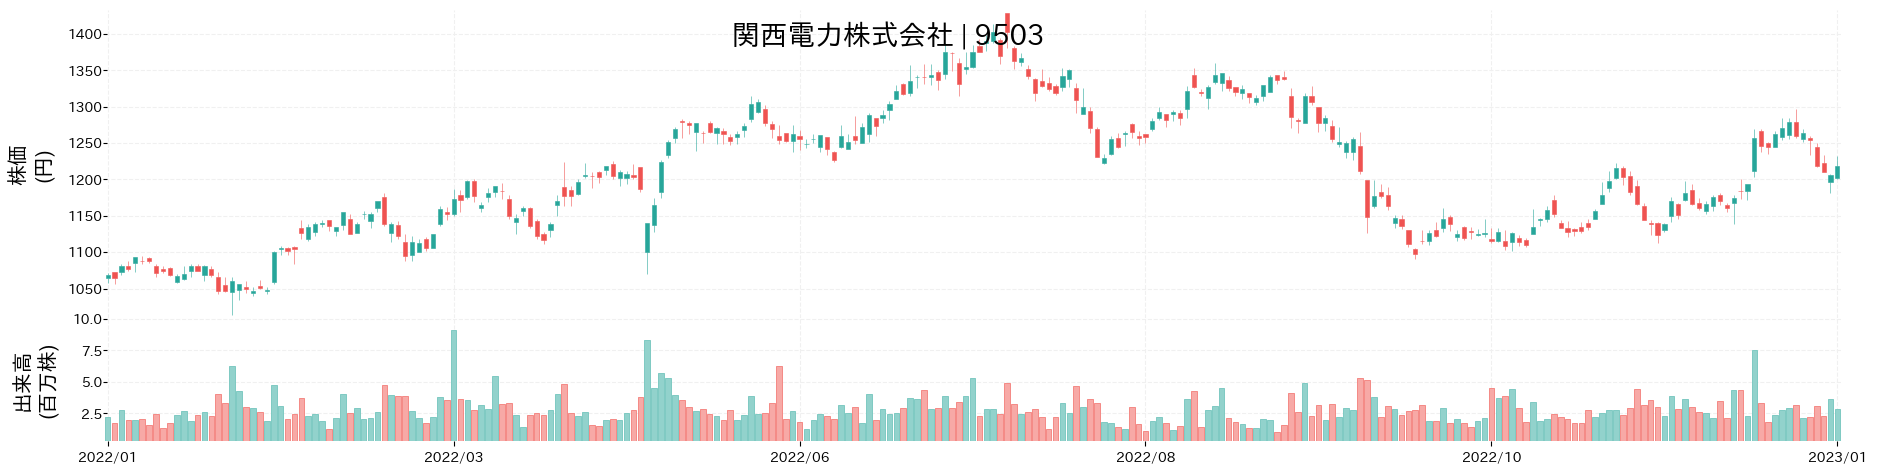 関西電力の株価推移(2022)